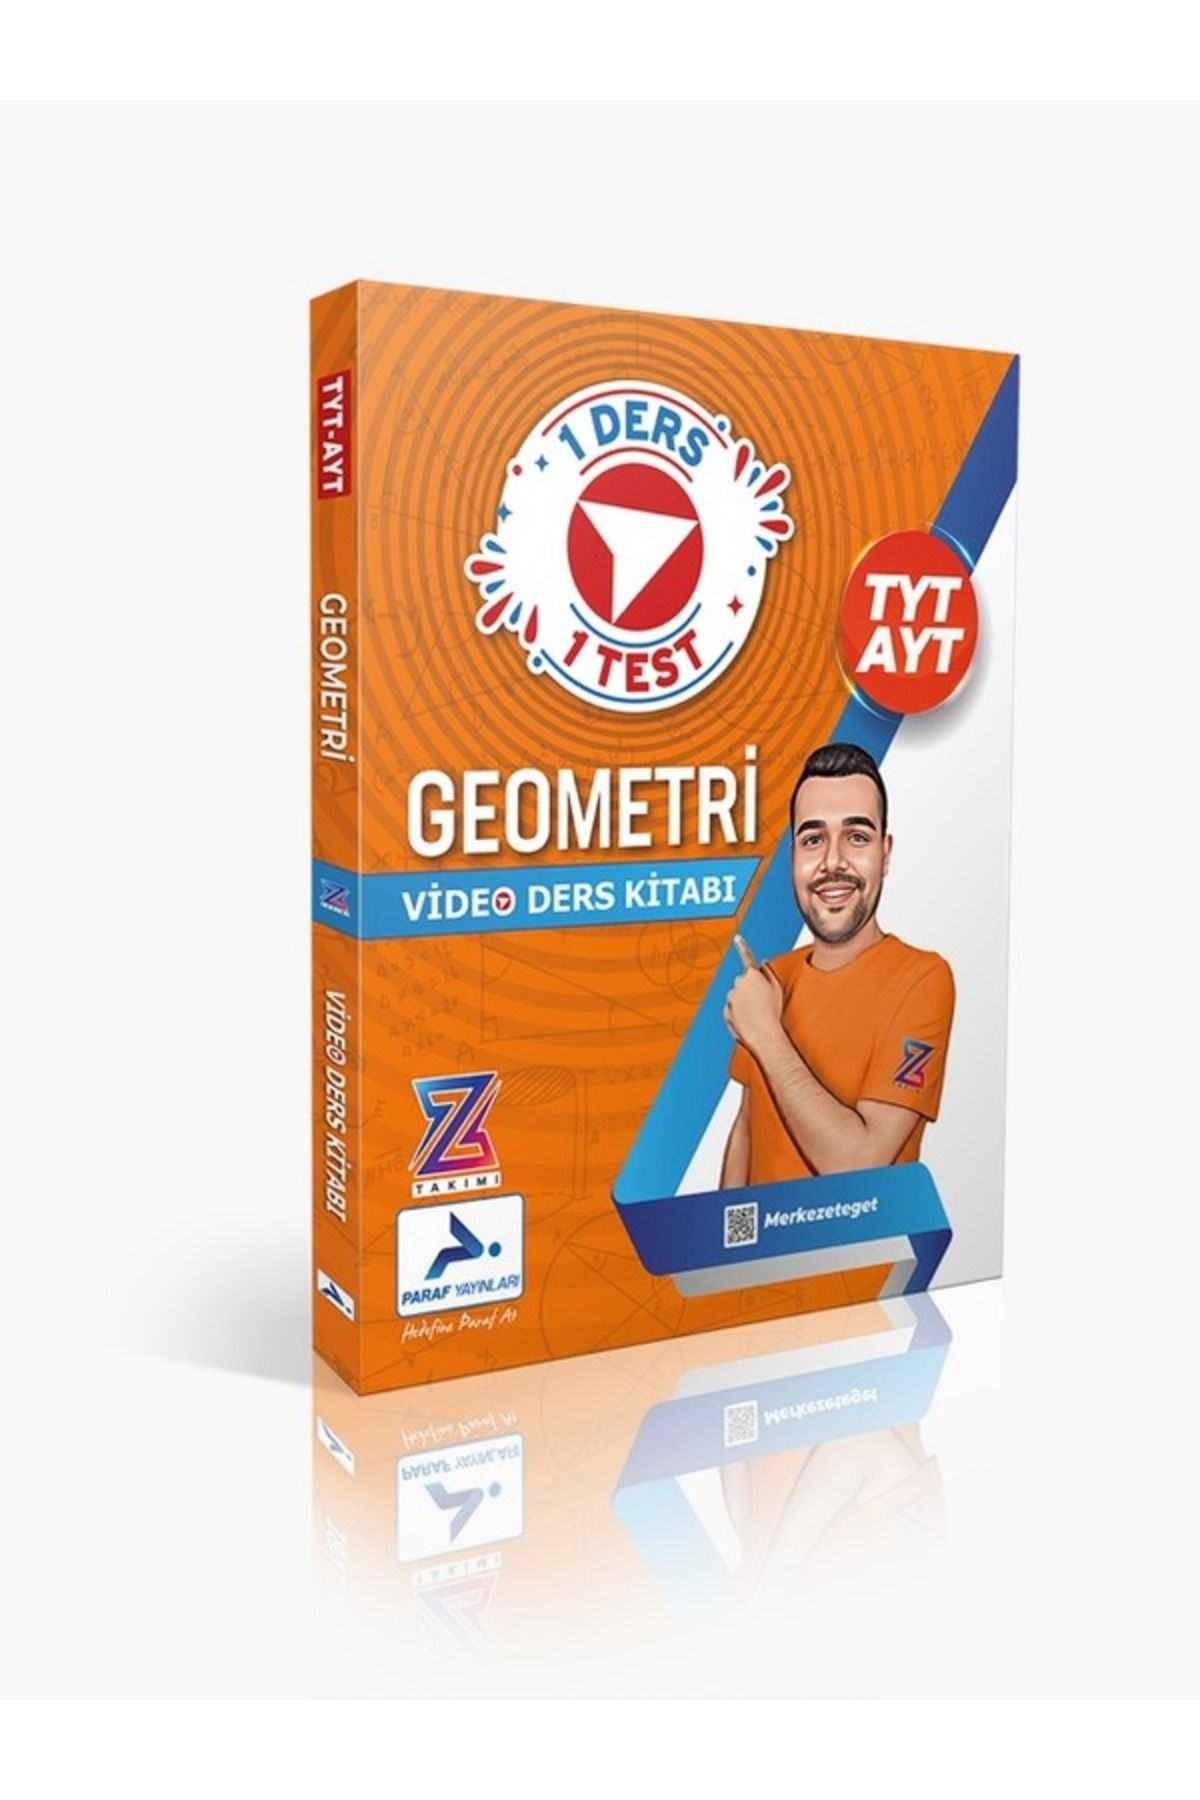 PRF Paraf Yayınları Paraf Z Takım Tyt Ayt Geometri Video Ders Anlatım Kitabı